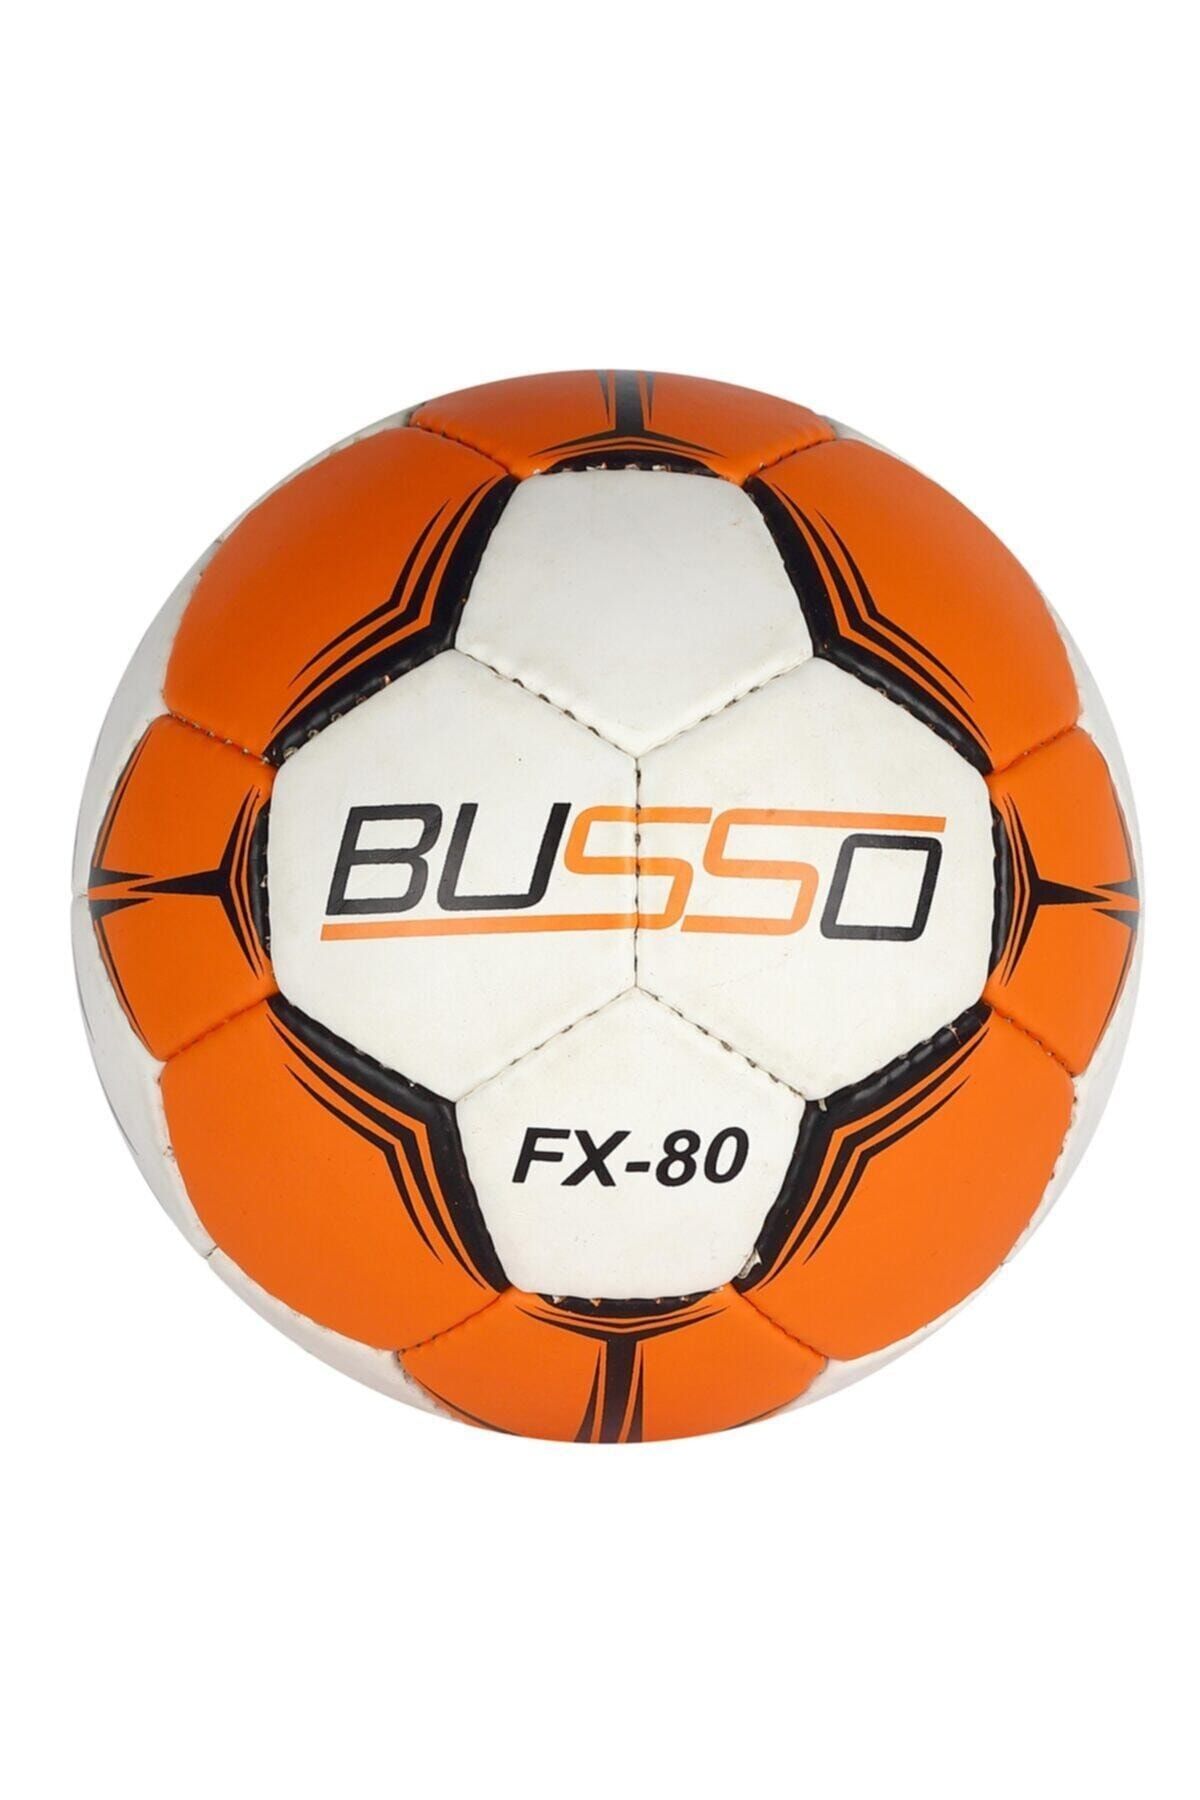 Busso Fx-80 Hentbol Topu El Dikişli